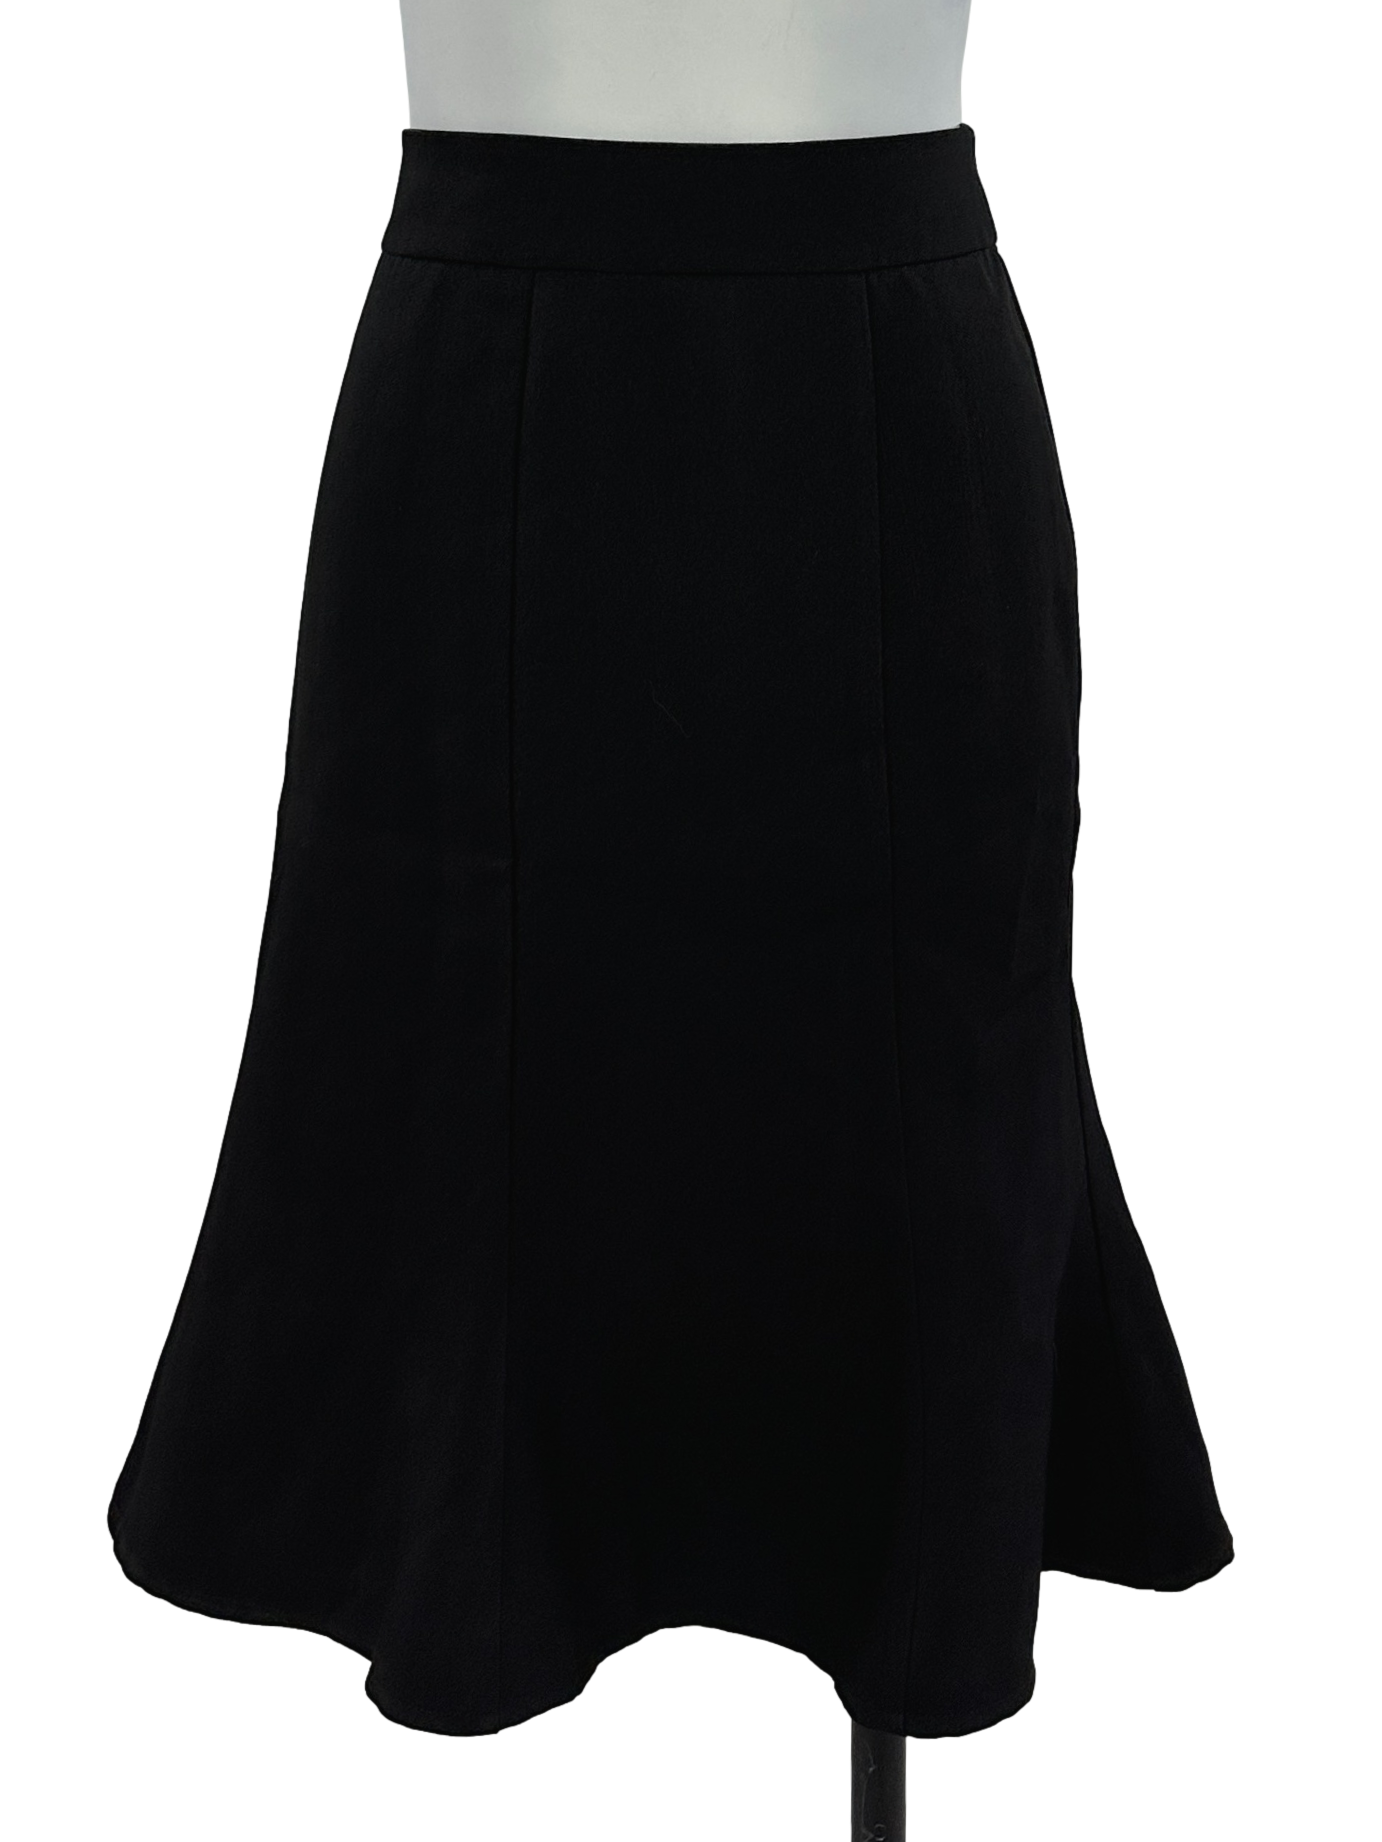 Black Bias Cut Skirt